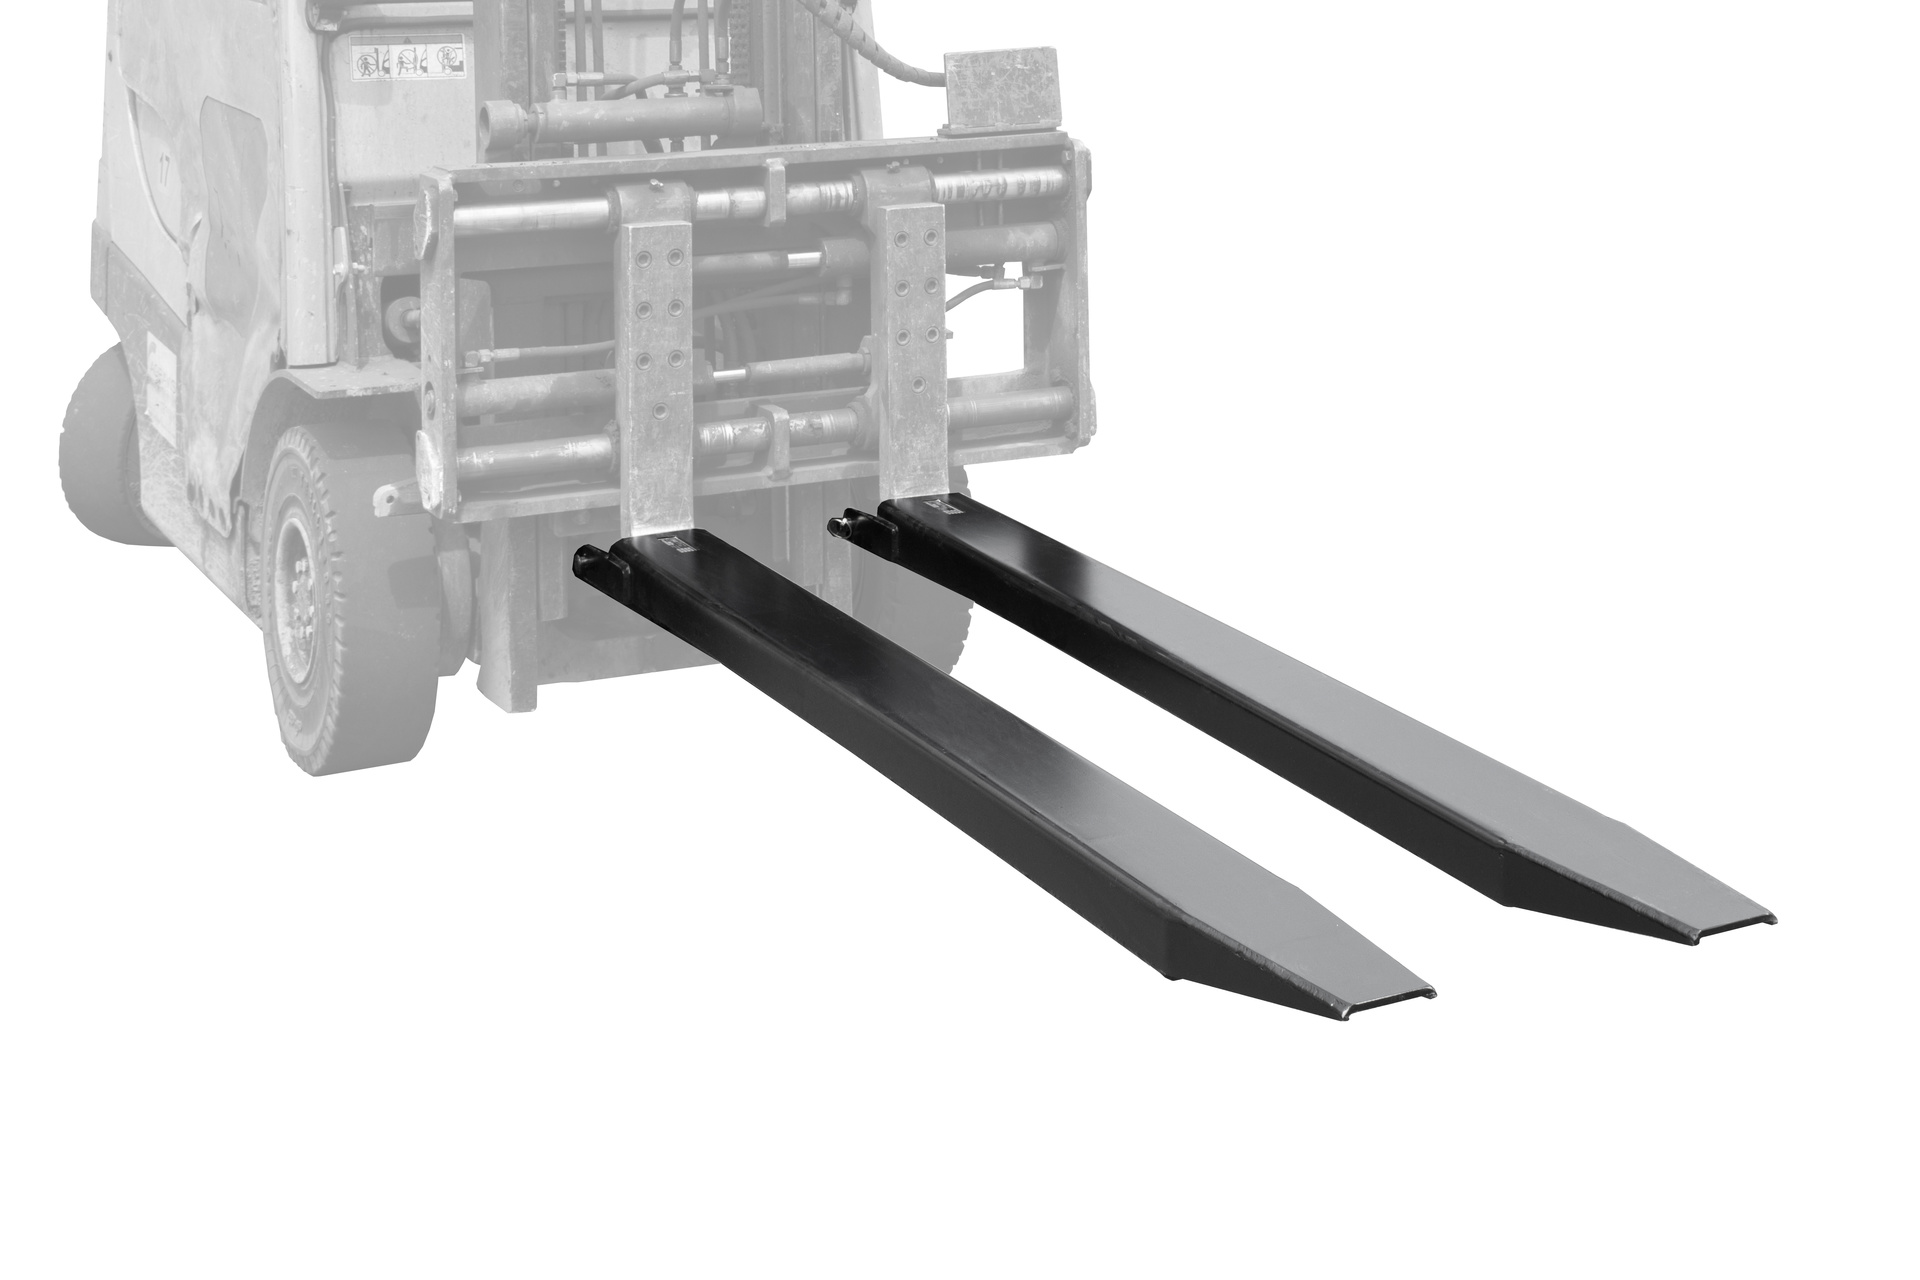 gabelverlängerung-stapler-100-45-1800-angebracht-black